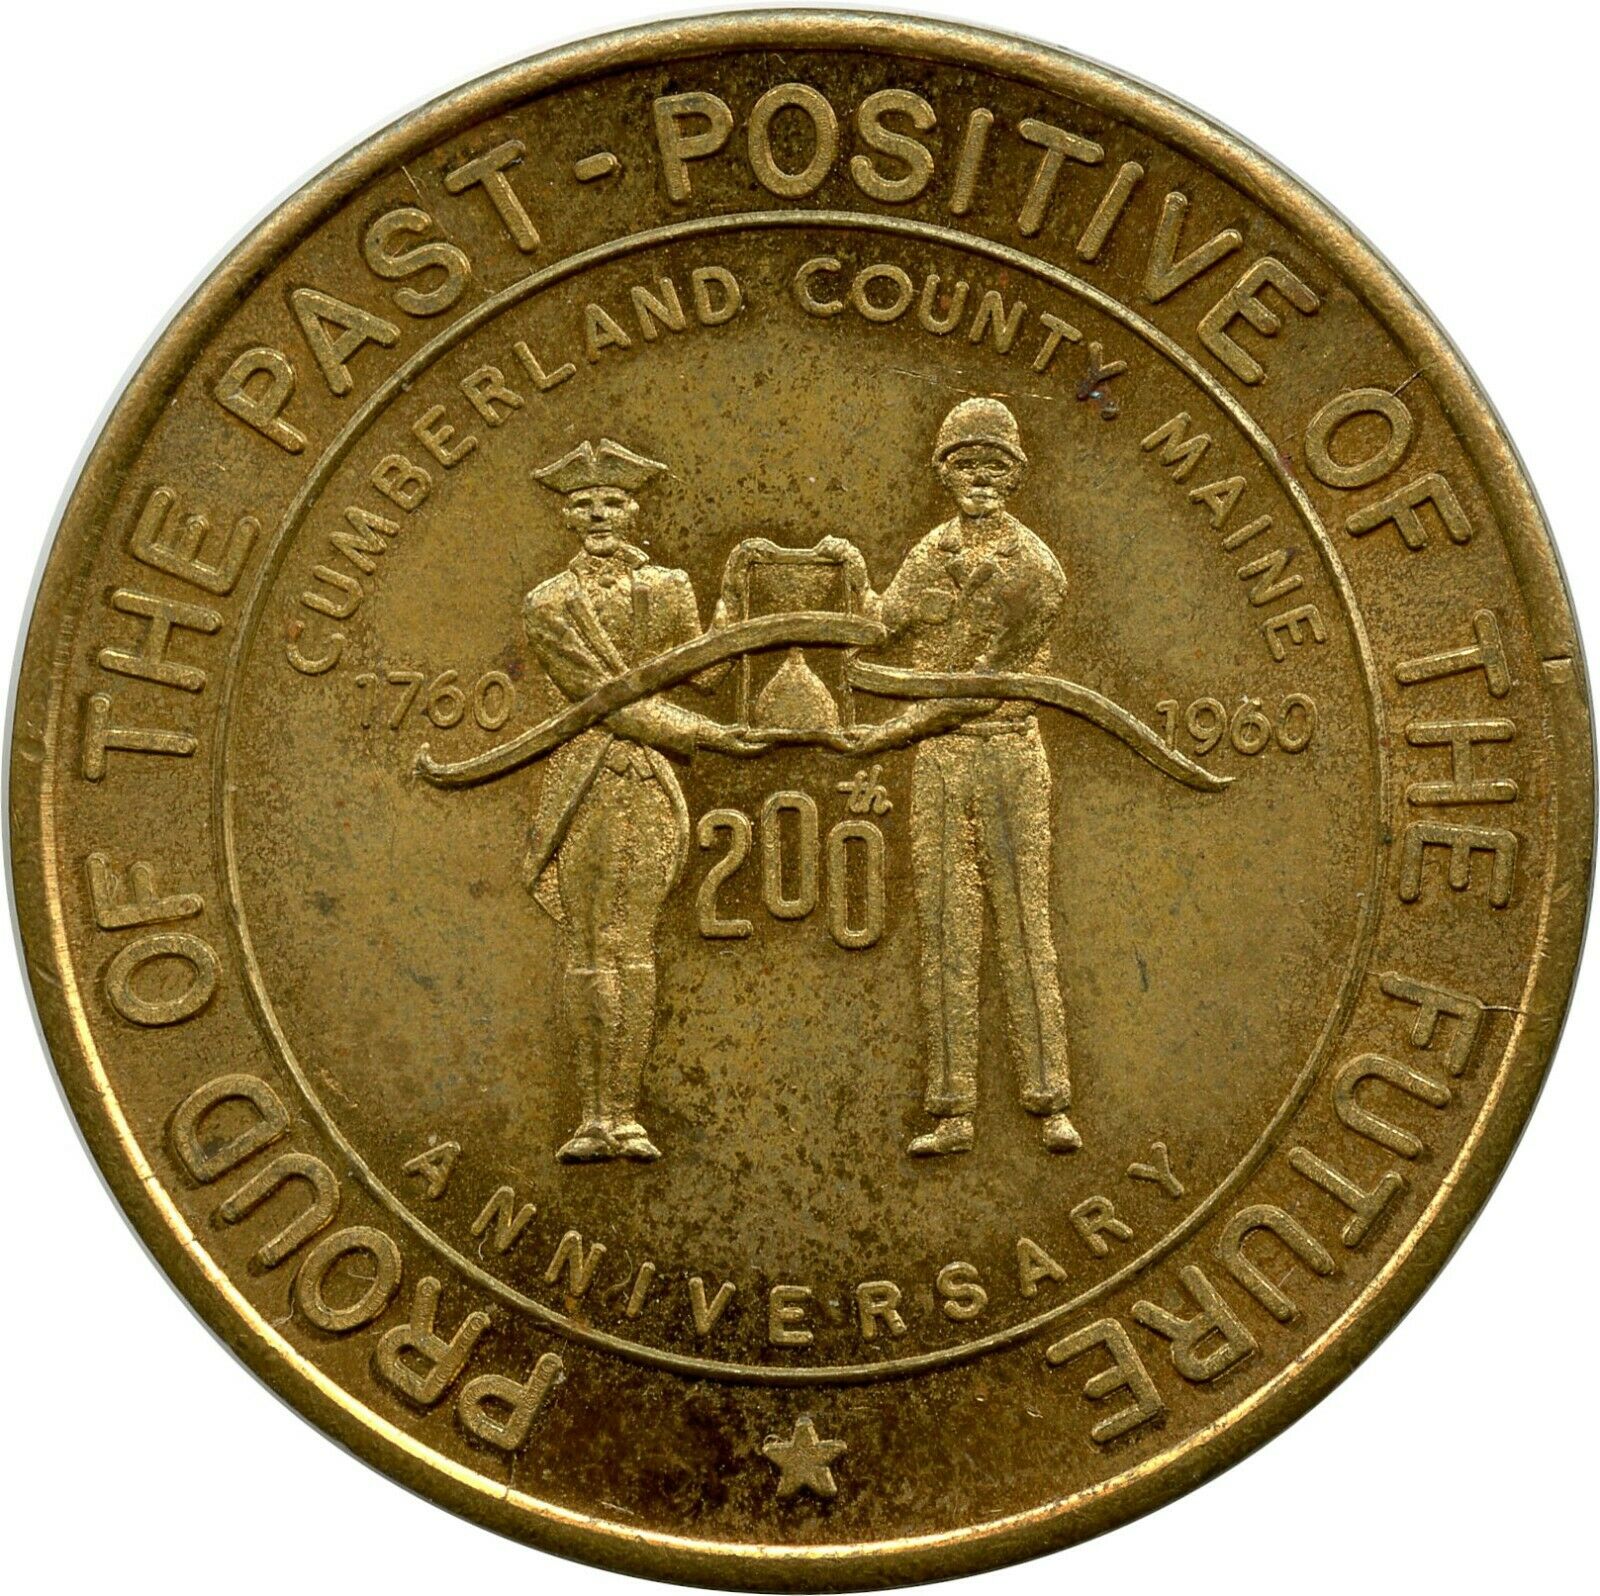 1960 Cumberland County Maine 200th Anniversary 50¢ So Called Half Dollar Token